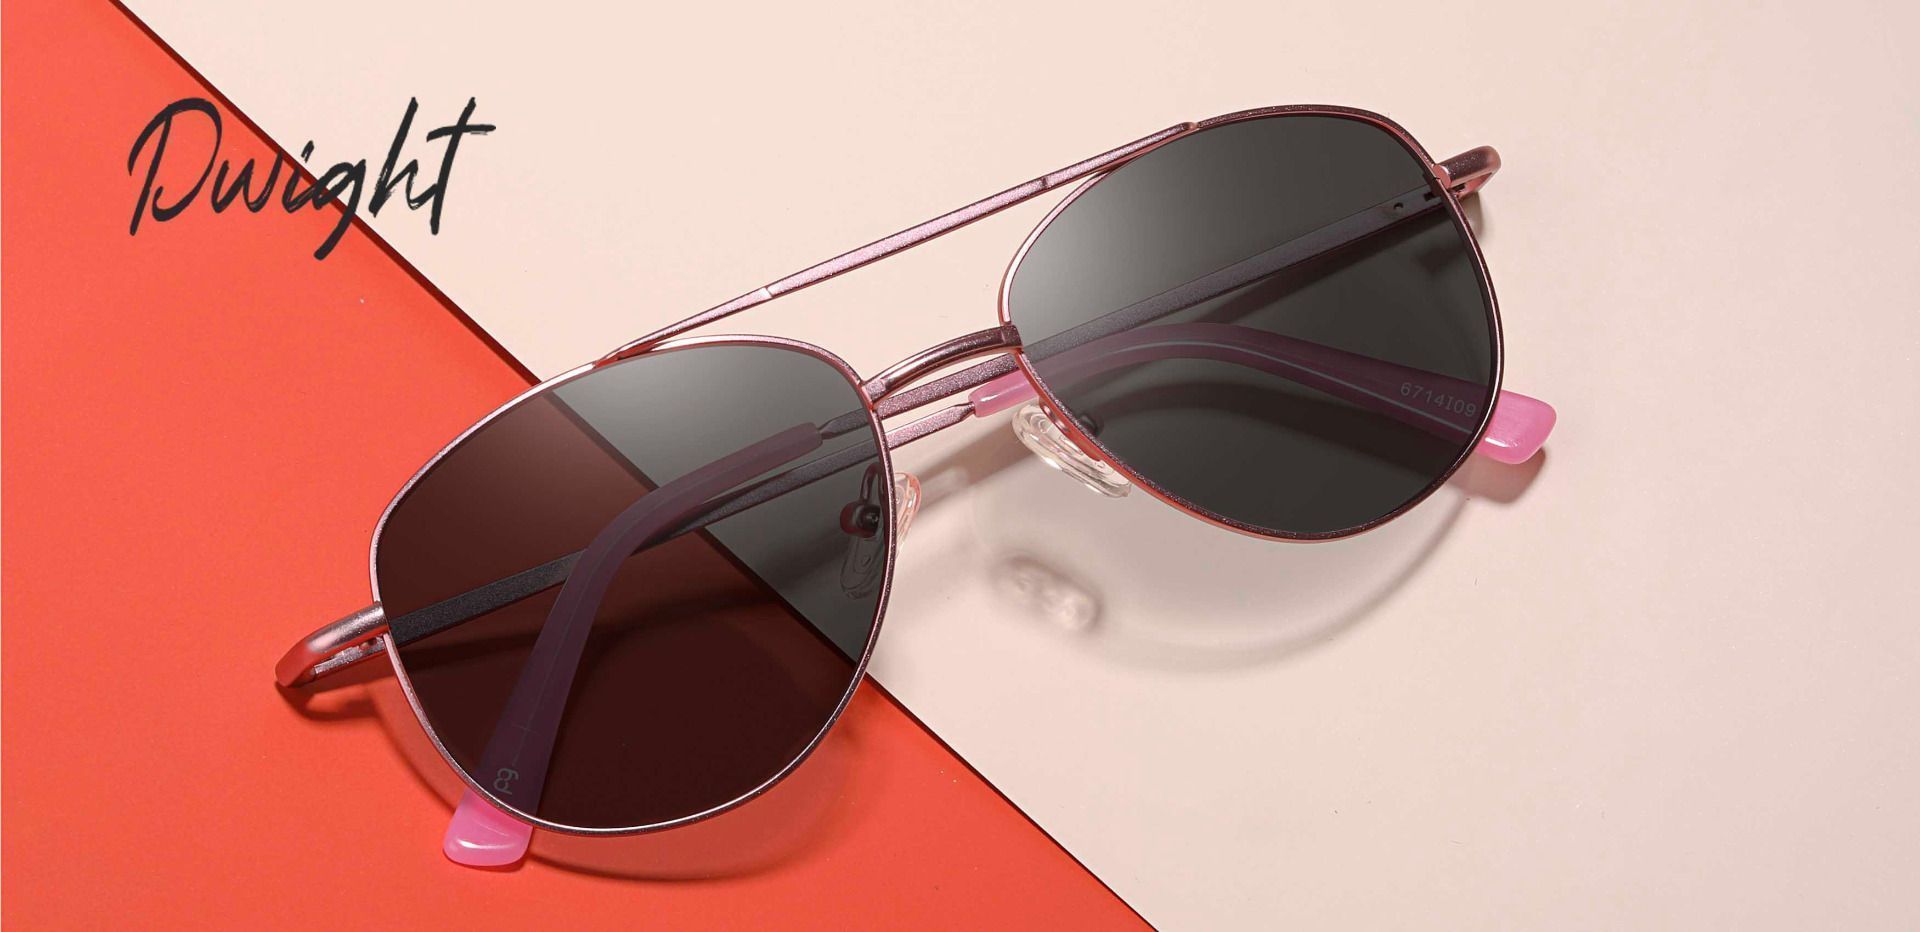 Dwight Aviator Prescription Sunglasses - Pink Frame With Gray Lenses